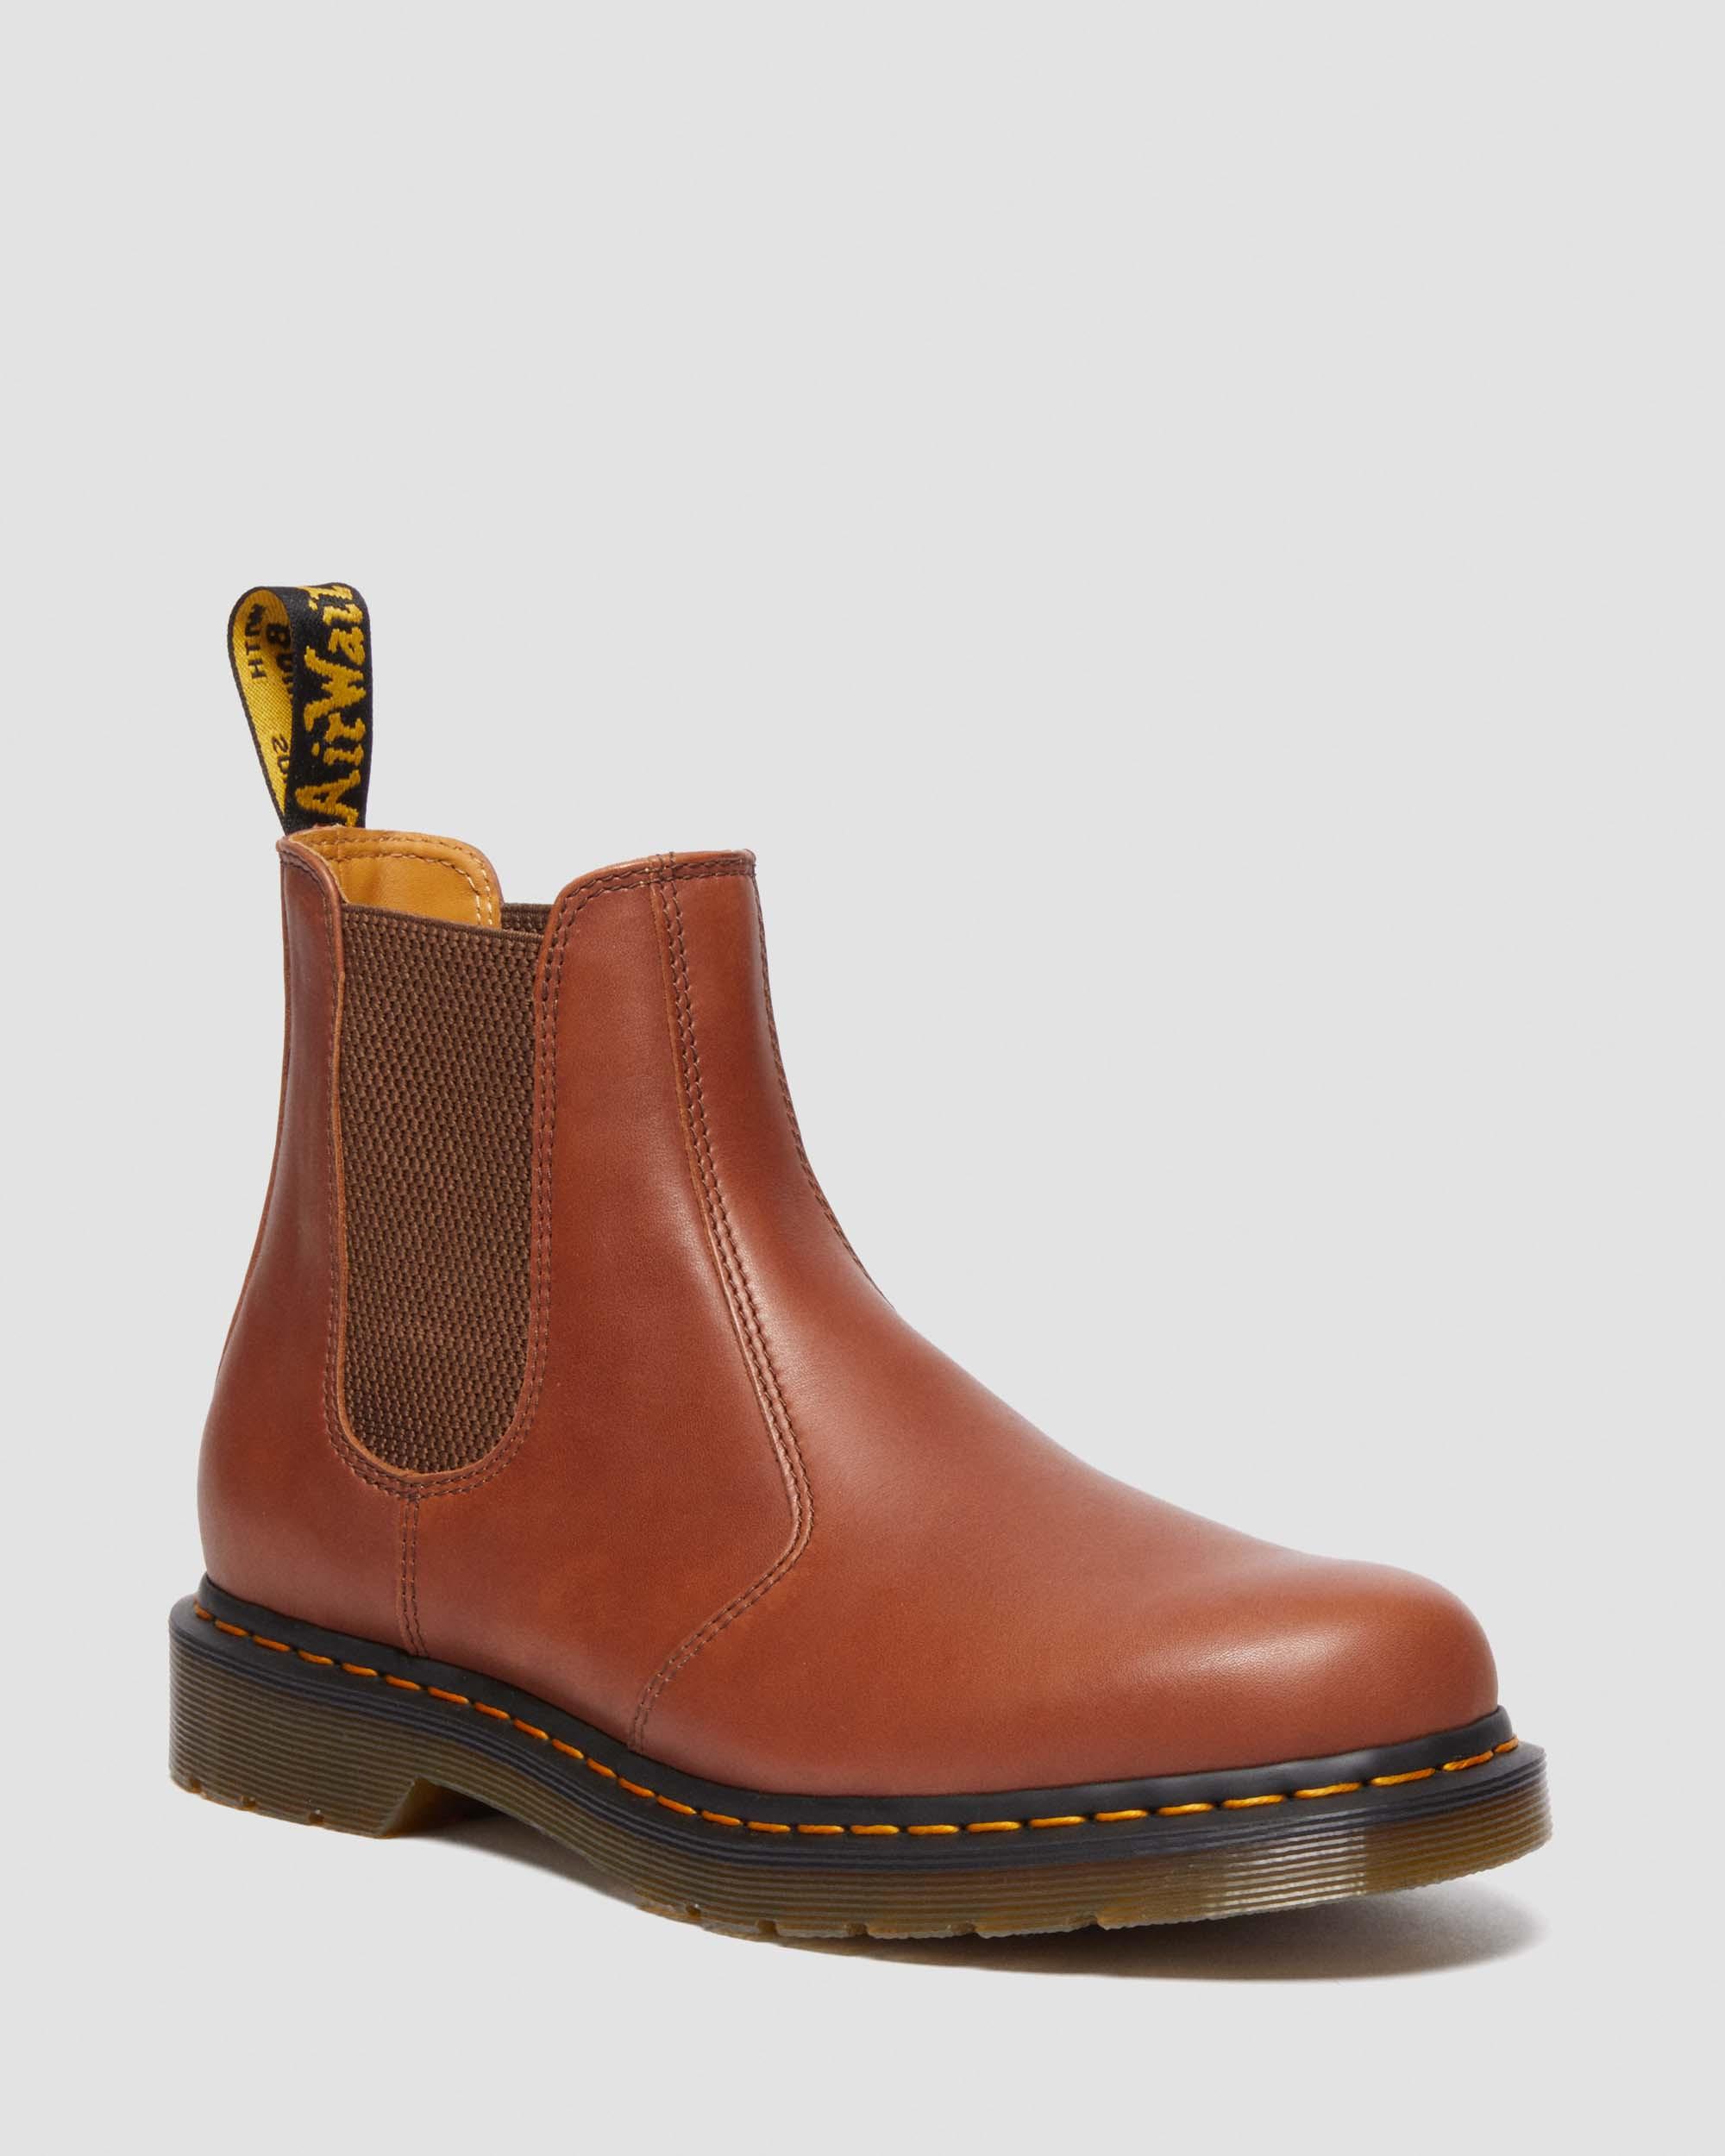 2976 Carrara Leather Chelsea Boots